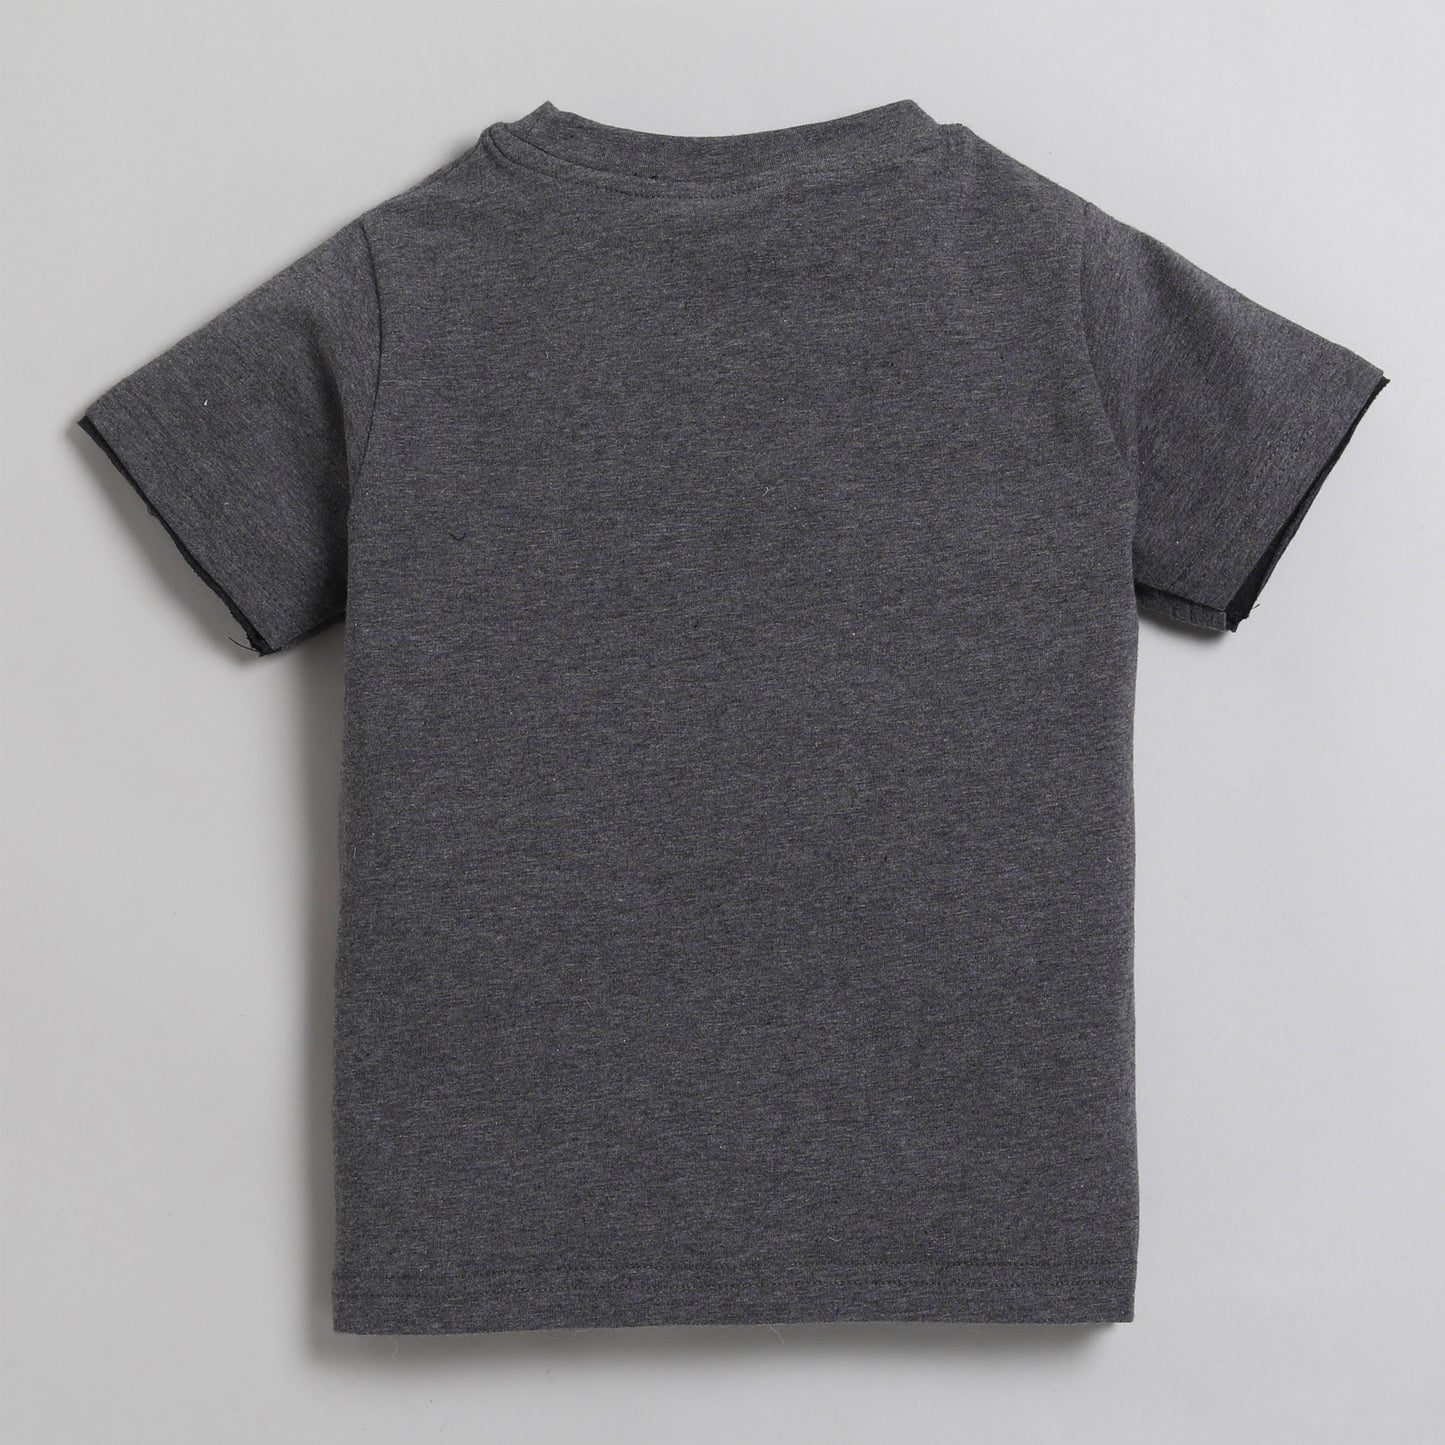 Polka Tots Half Sleeve T-Shirt 100% Cotton Great Player Print - Grey